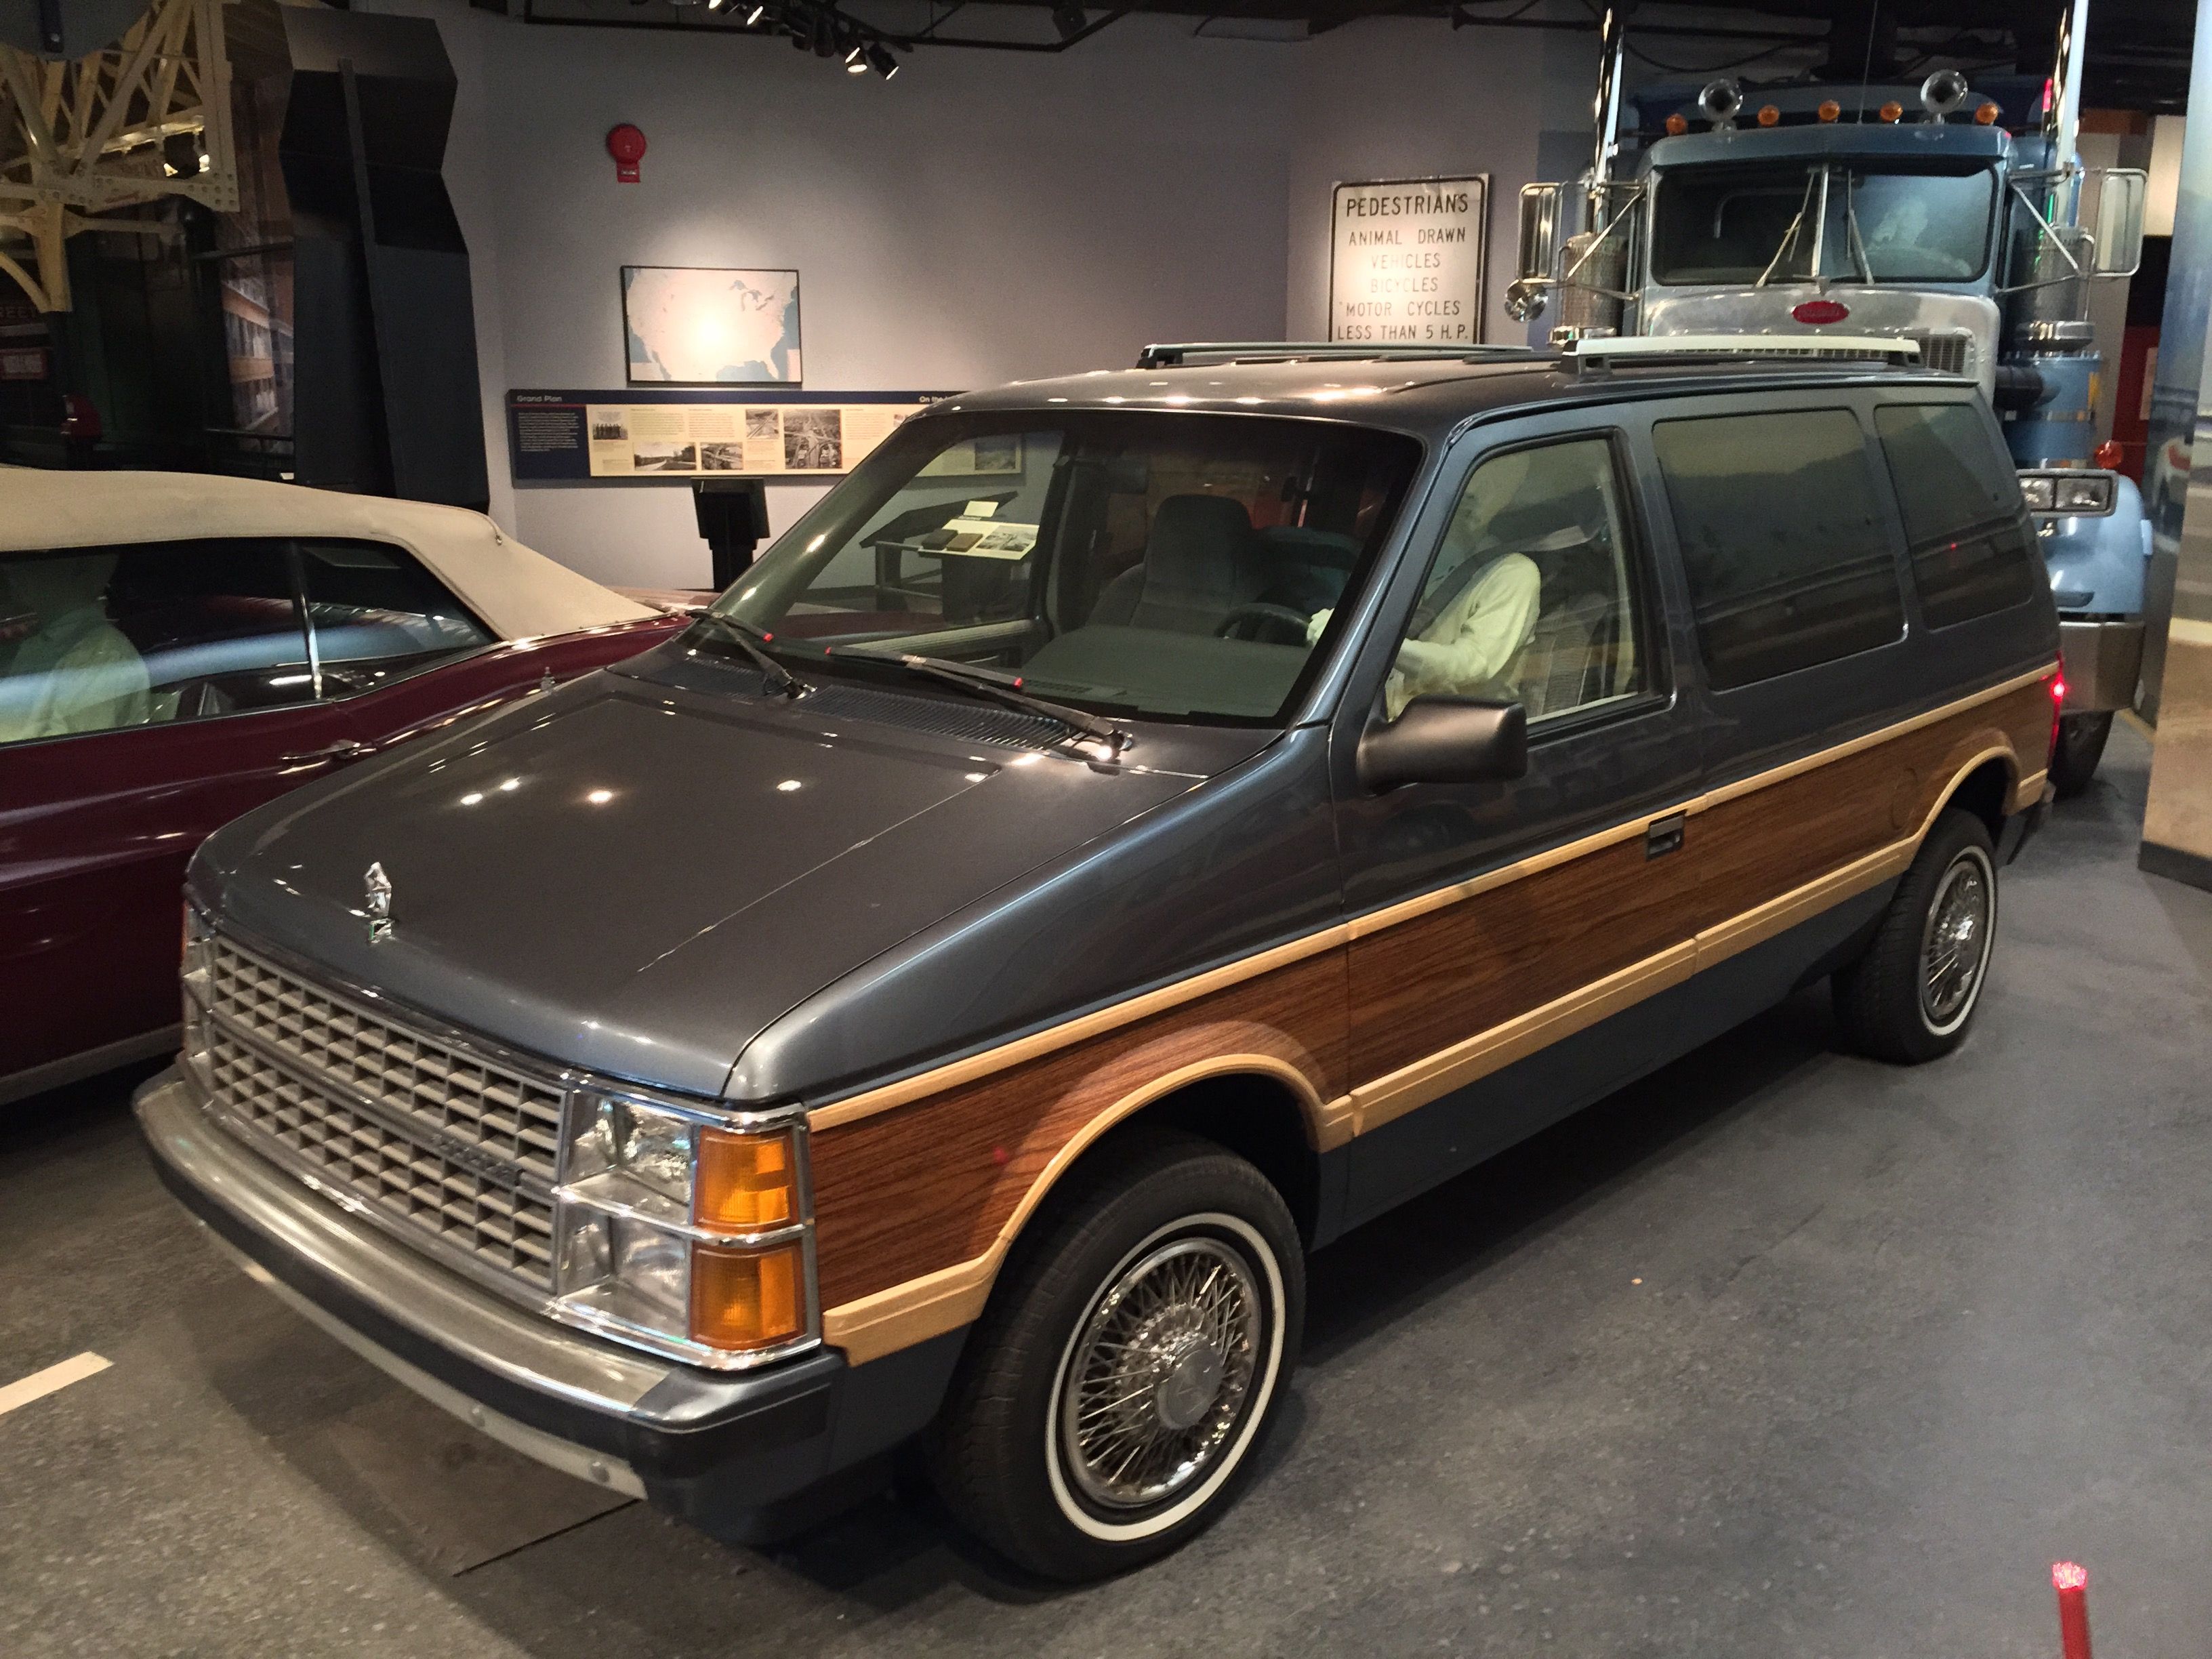 1986 Dodge Caravan on display